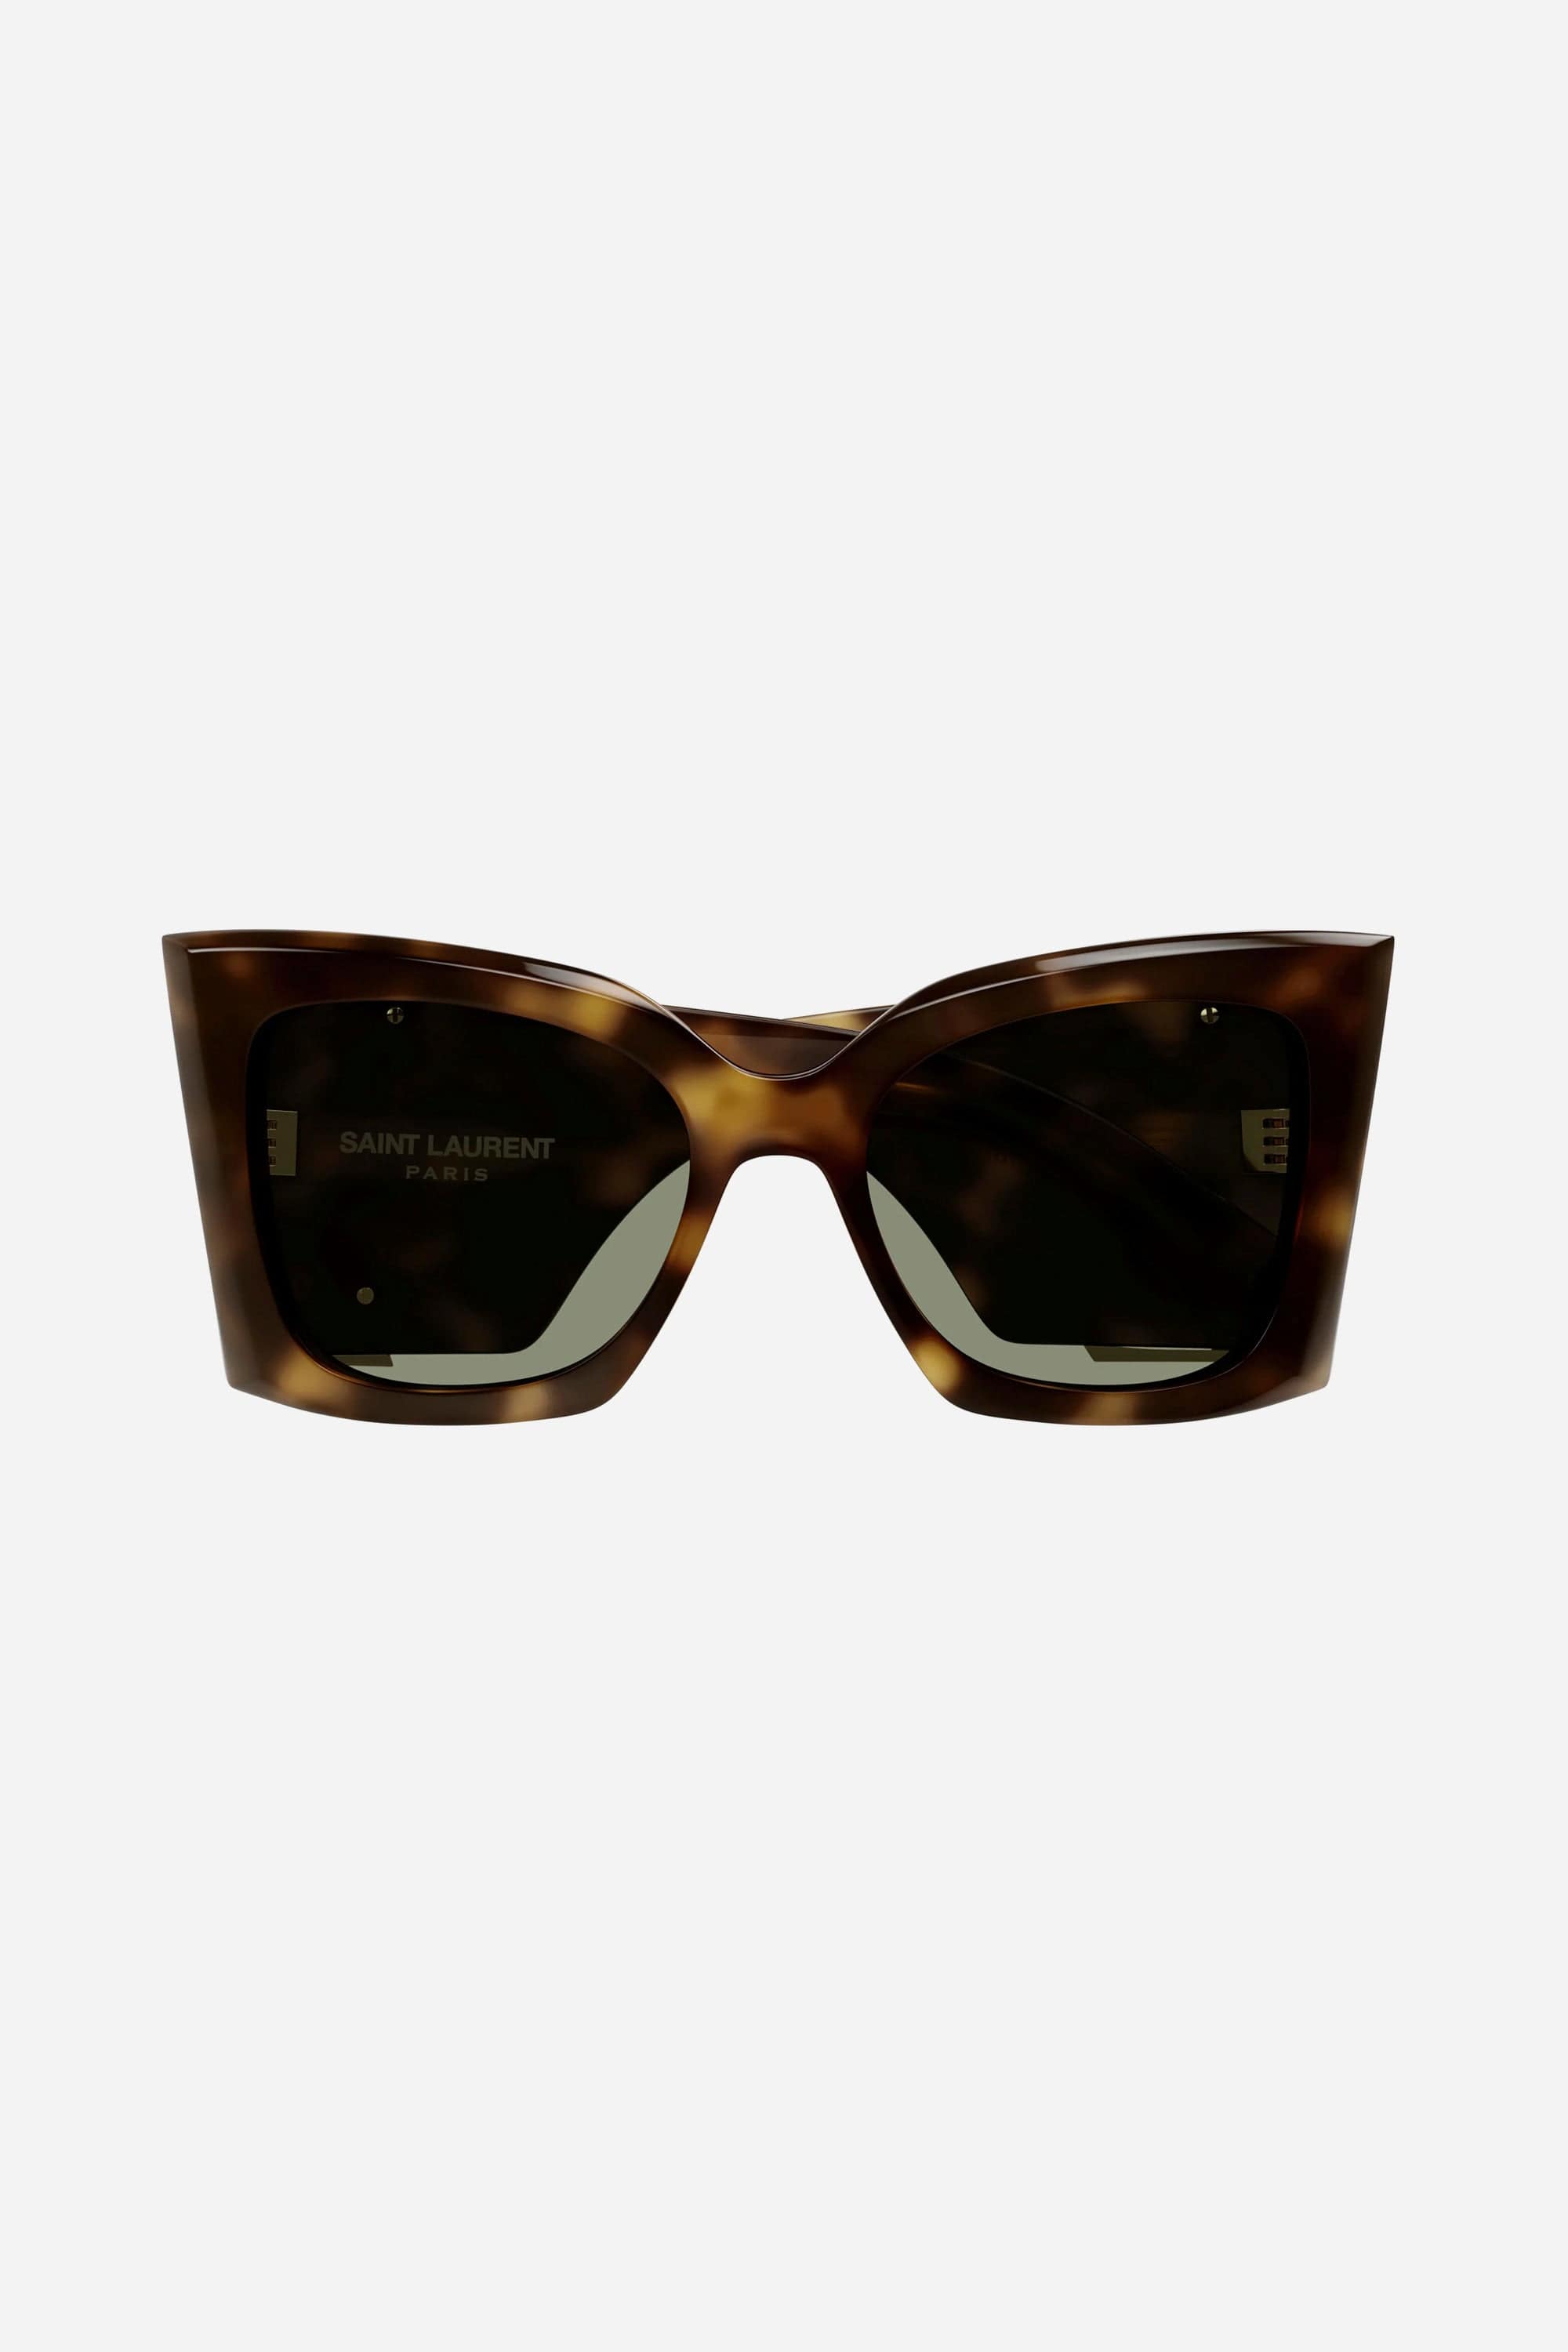 Saint Laurent Blaze SL M119 cat-eye havana sunglasses - Eyewear Club